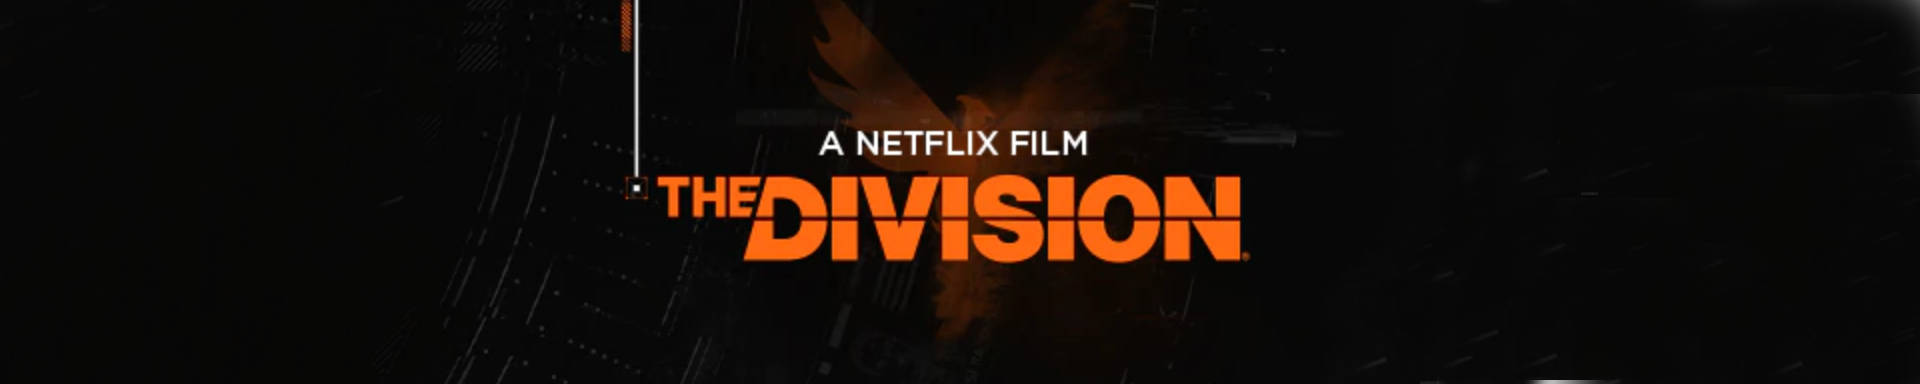 The Division Netflix movie slice